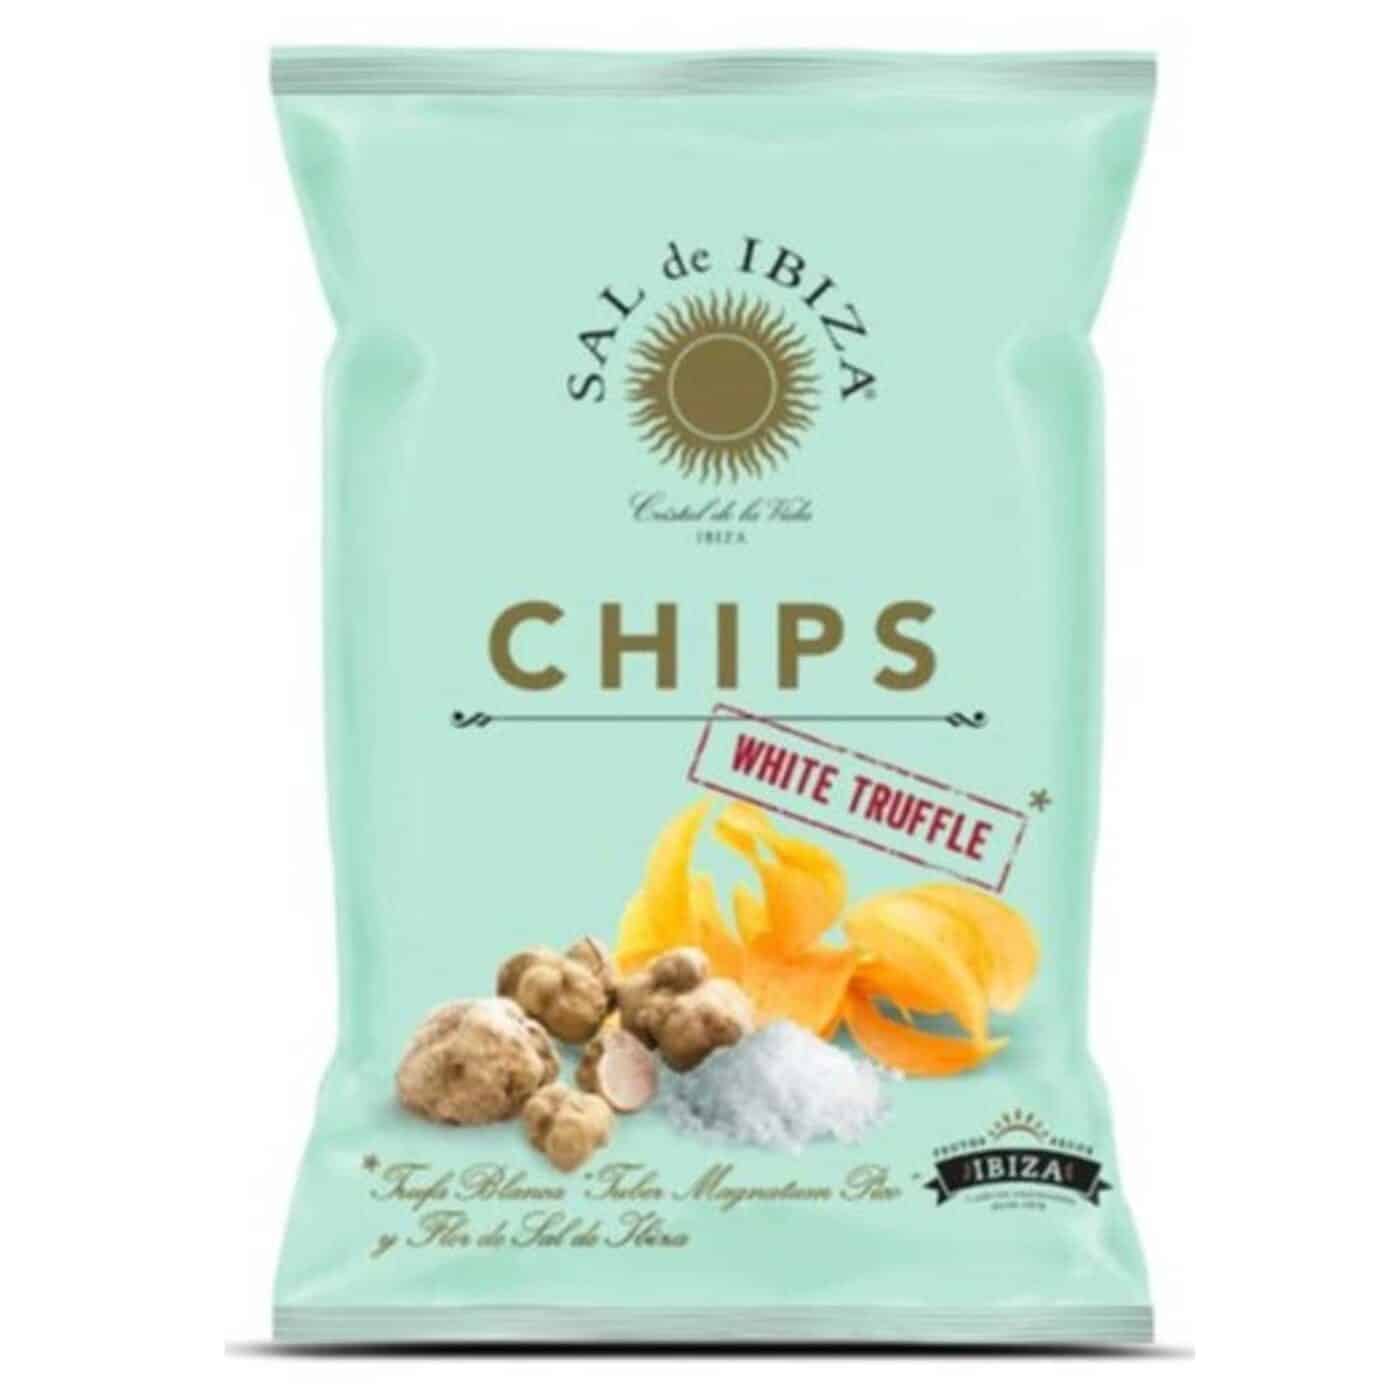 Chips met Truffel